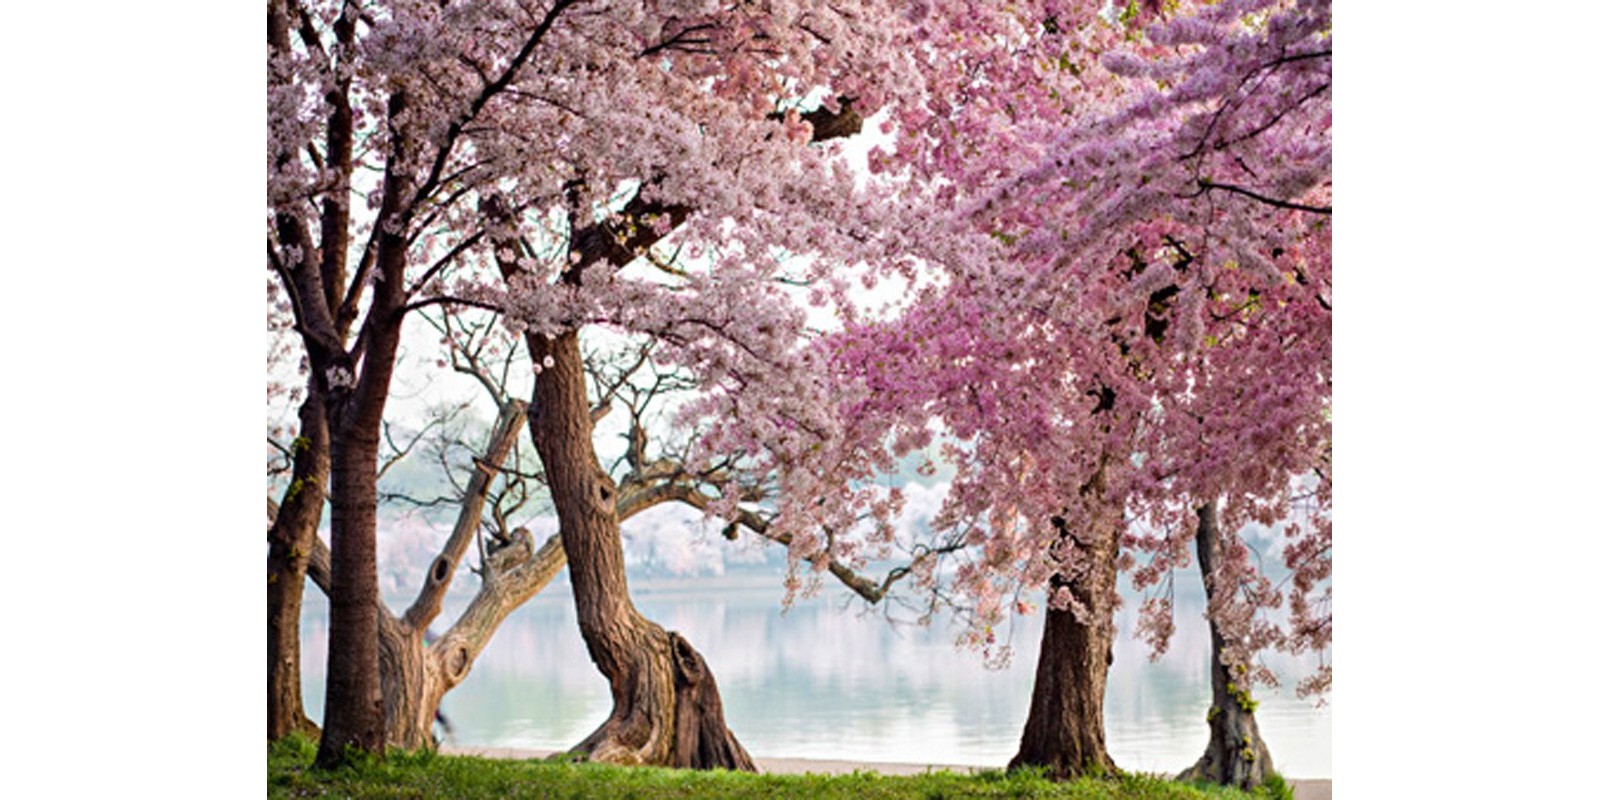 Anonymous - Cherry trees bloom, Washington, USA